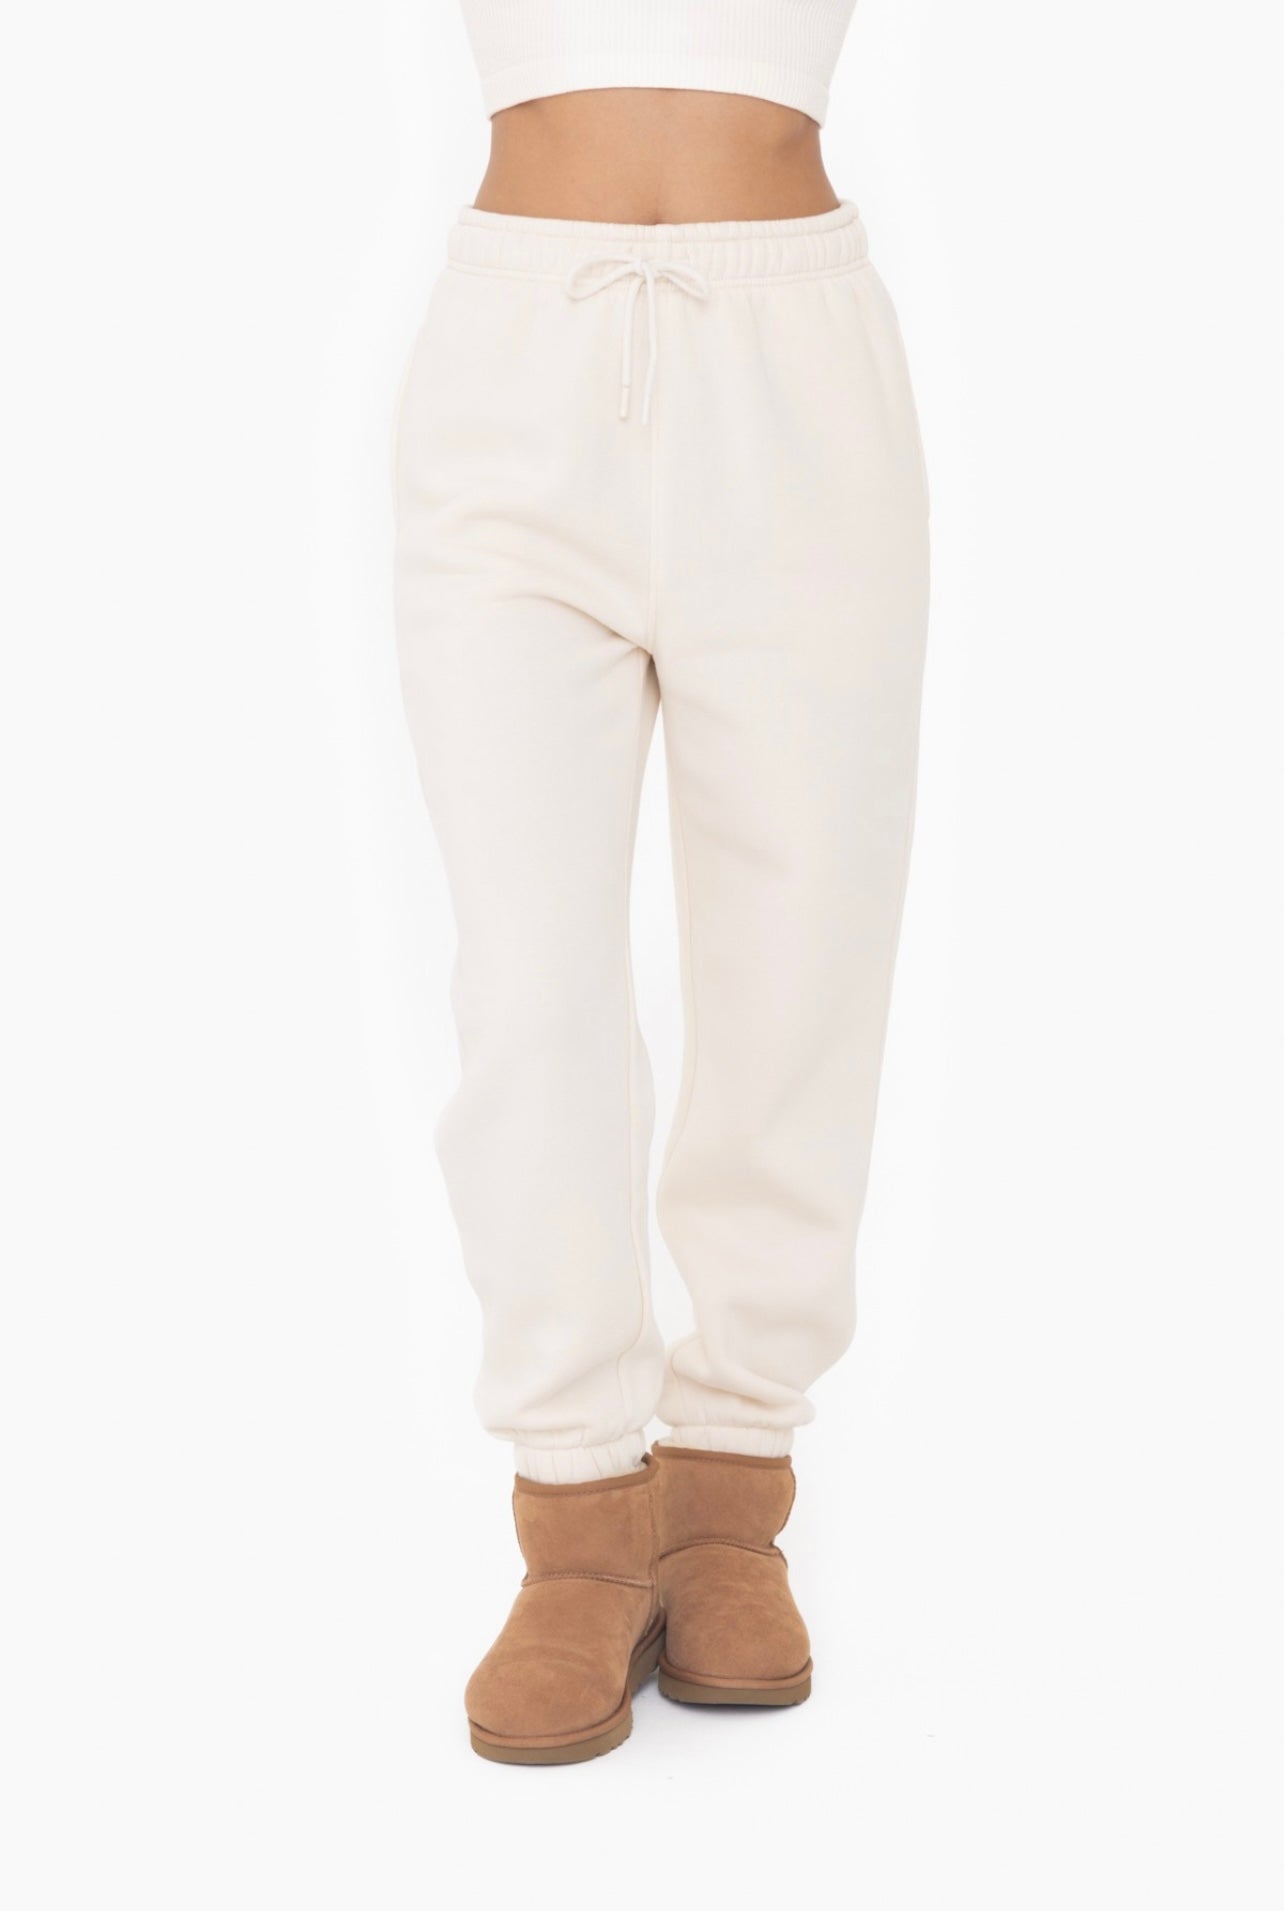 Cozy Fleece Pants (Pearled Ivory)